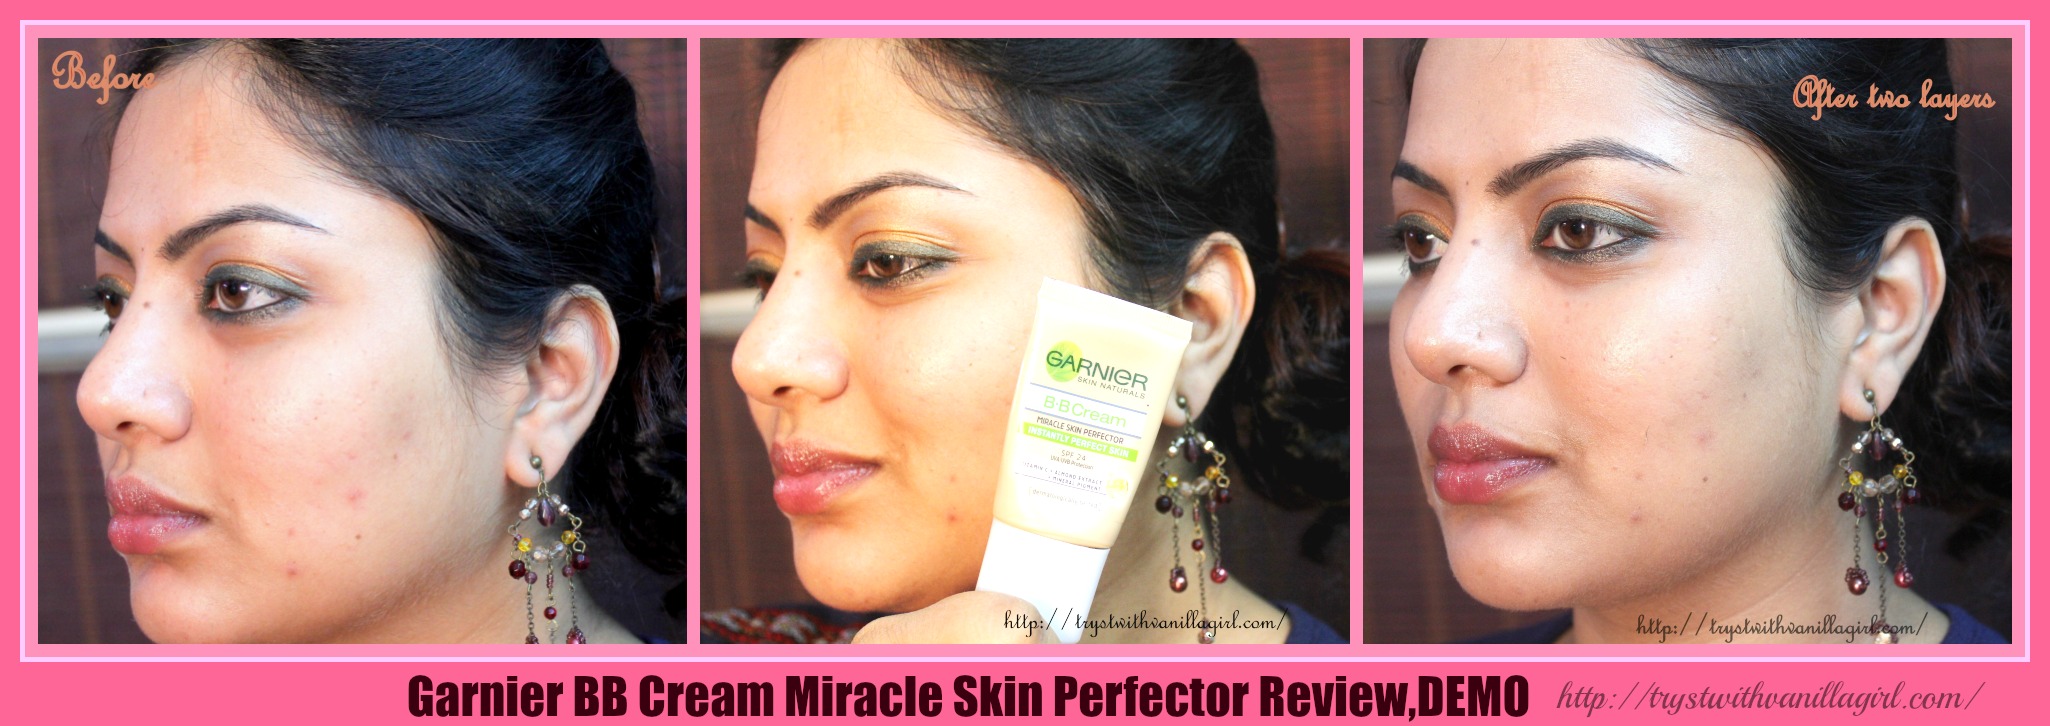 Garnier BB Cream Miracle Skin Perfector Review,Swatch,Photos